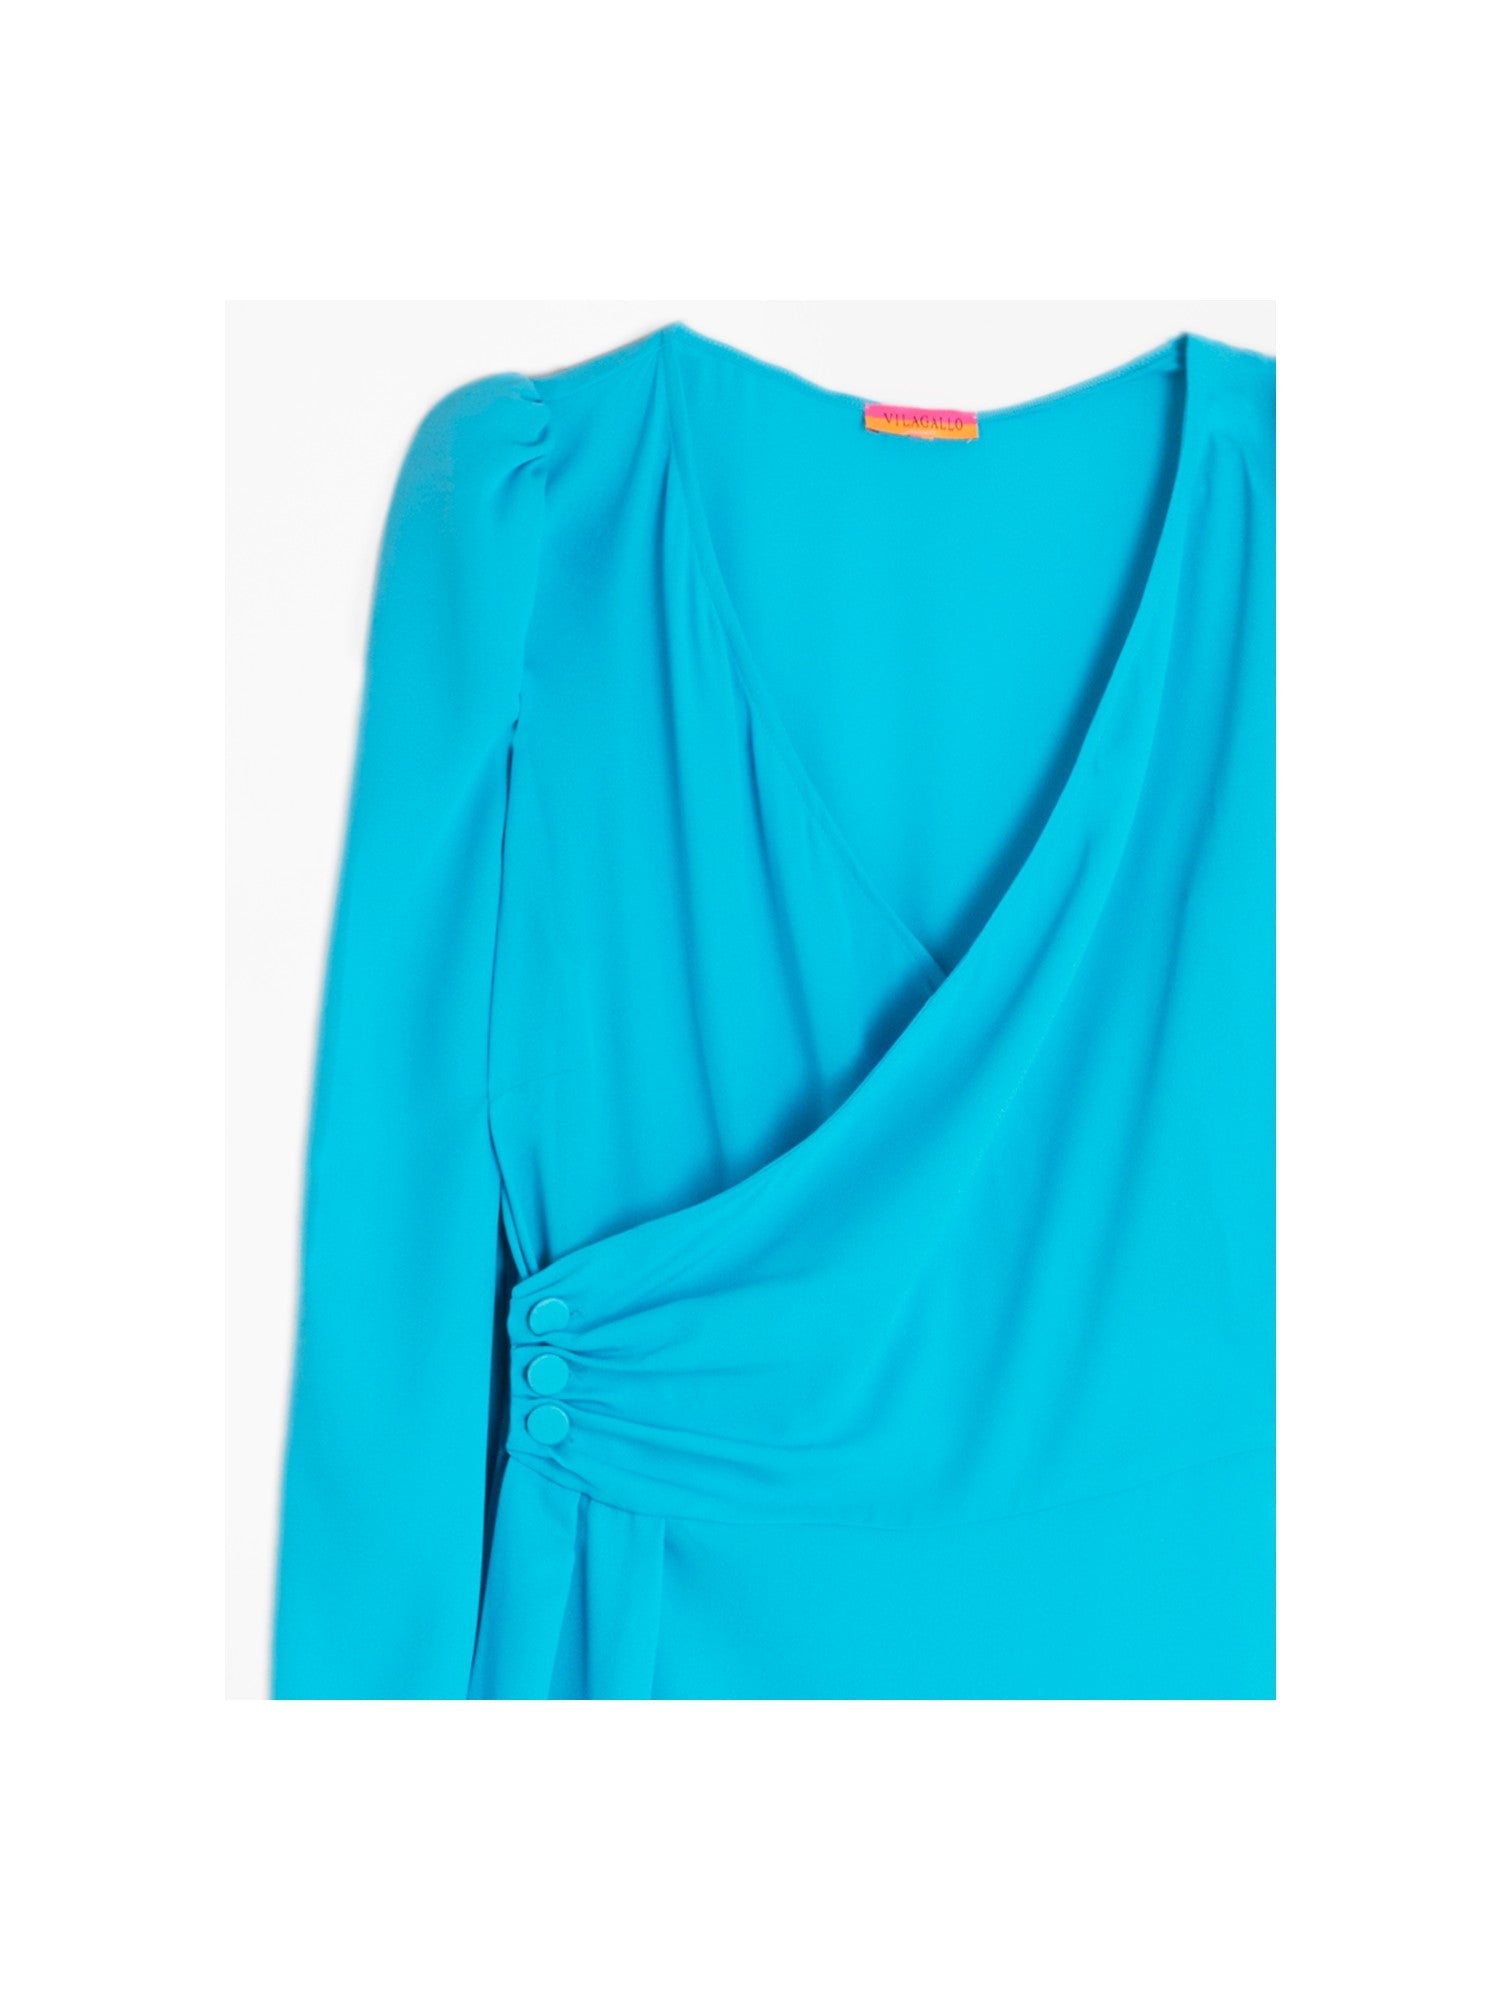 Virginie Dress in Turquoise Georgette - The Posh Loft